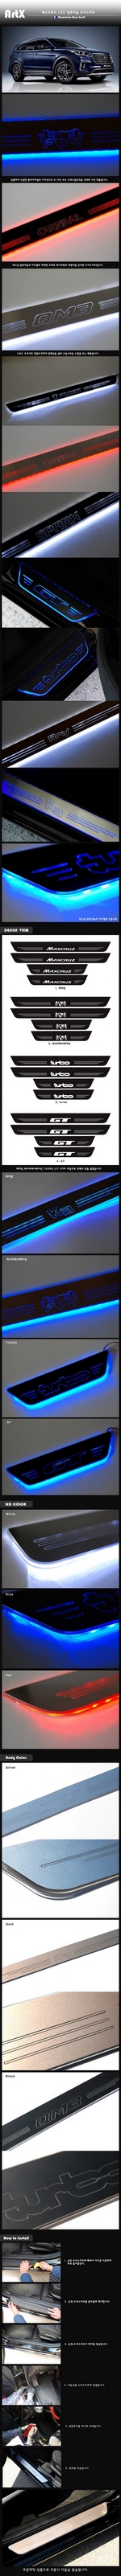 Накладки на пороги алюминиевые с подсветкой (вариант 2) ArtX Hyundai Grand Santa Fe 2013-2019